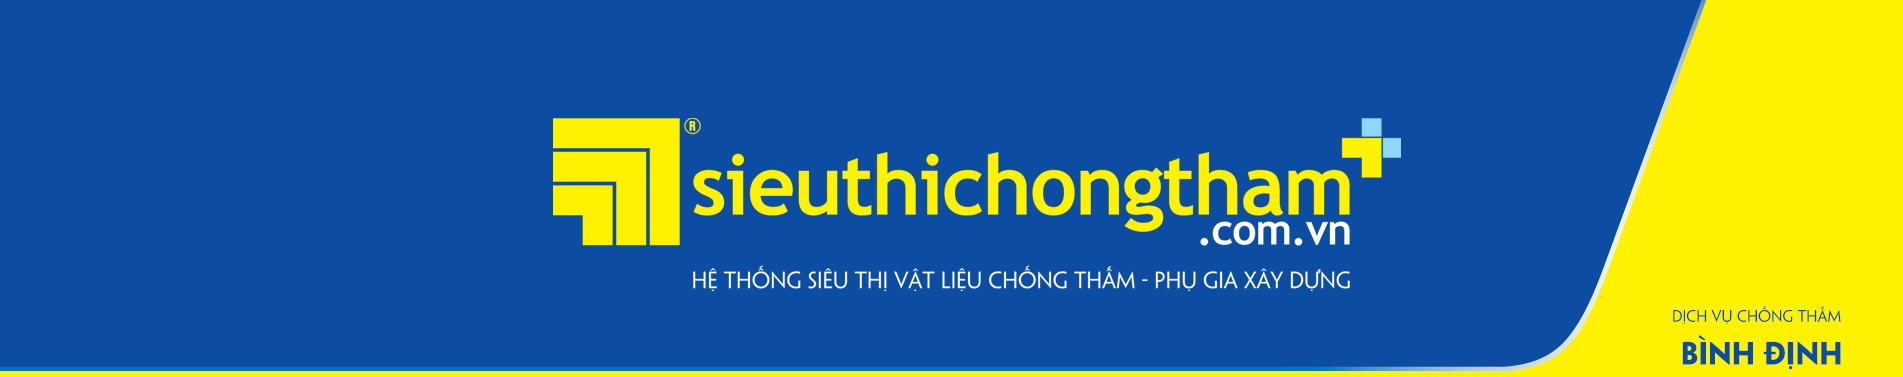 Dich Vu Chong Tham Binh Dinh